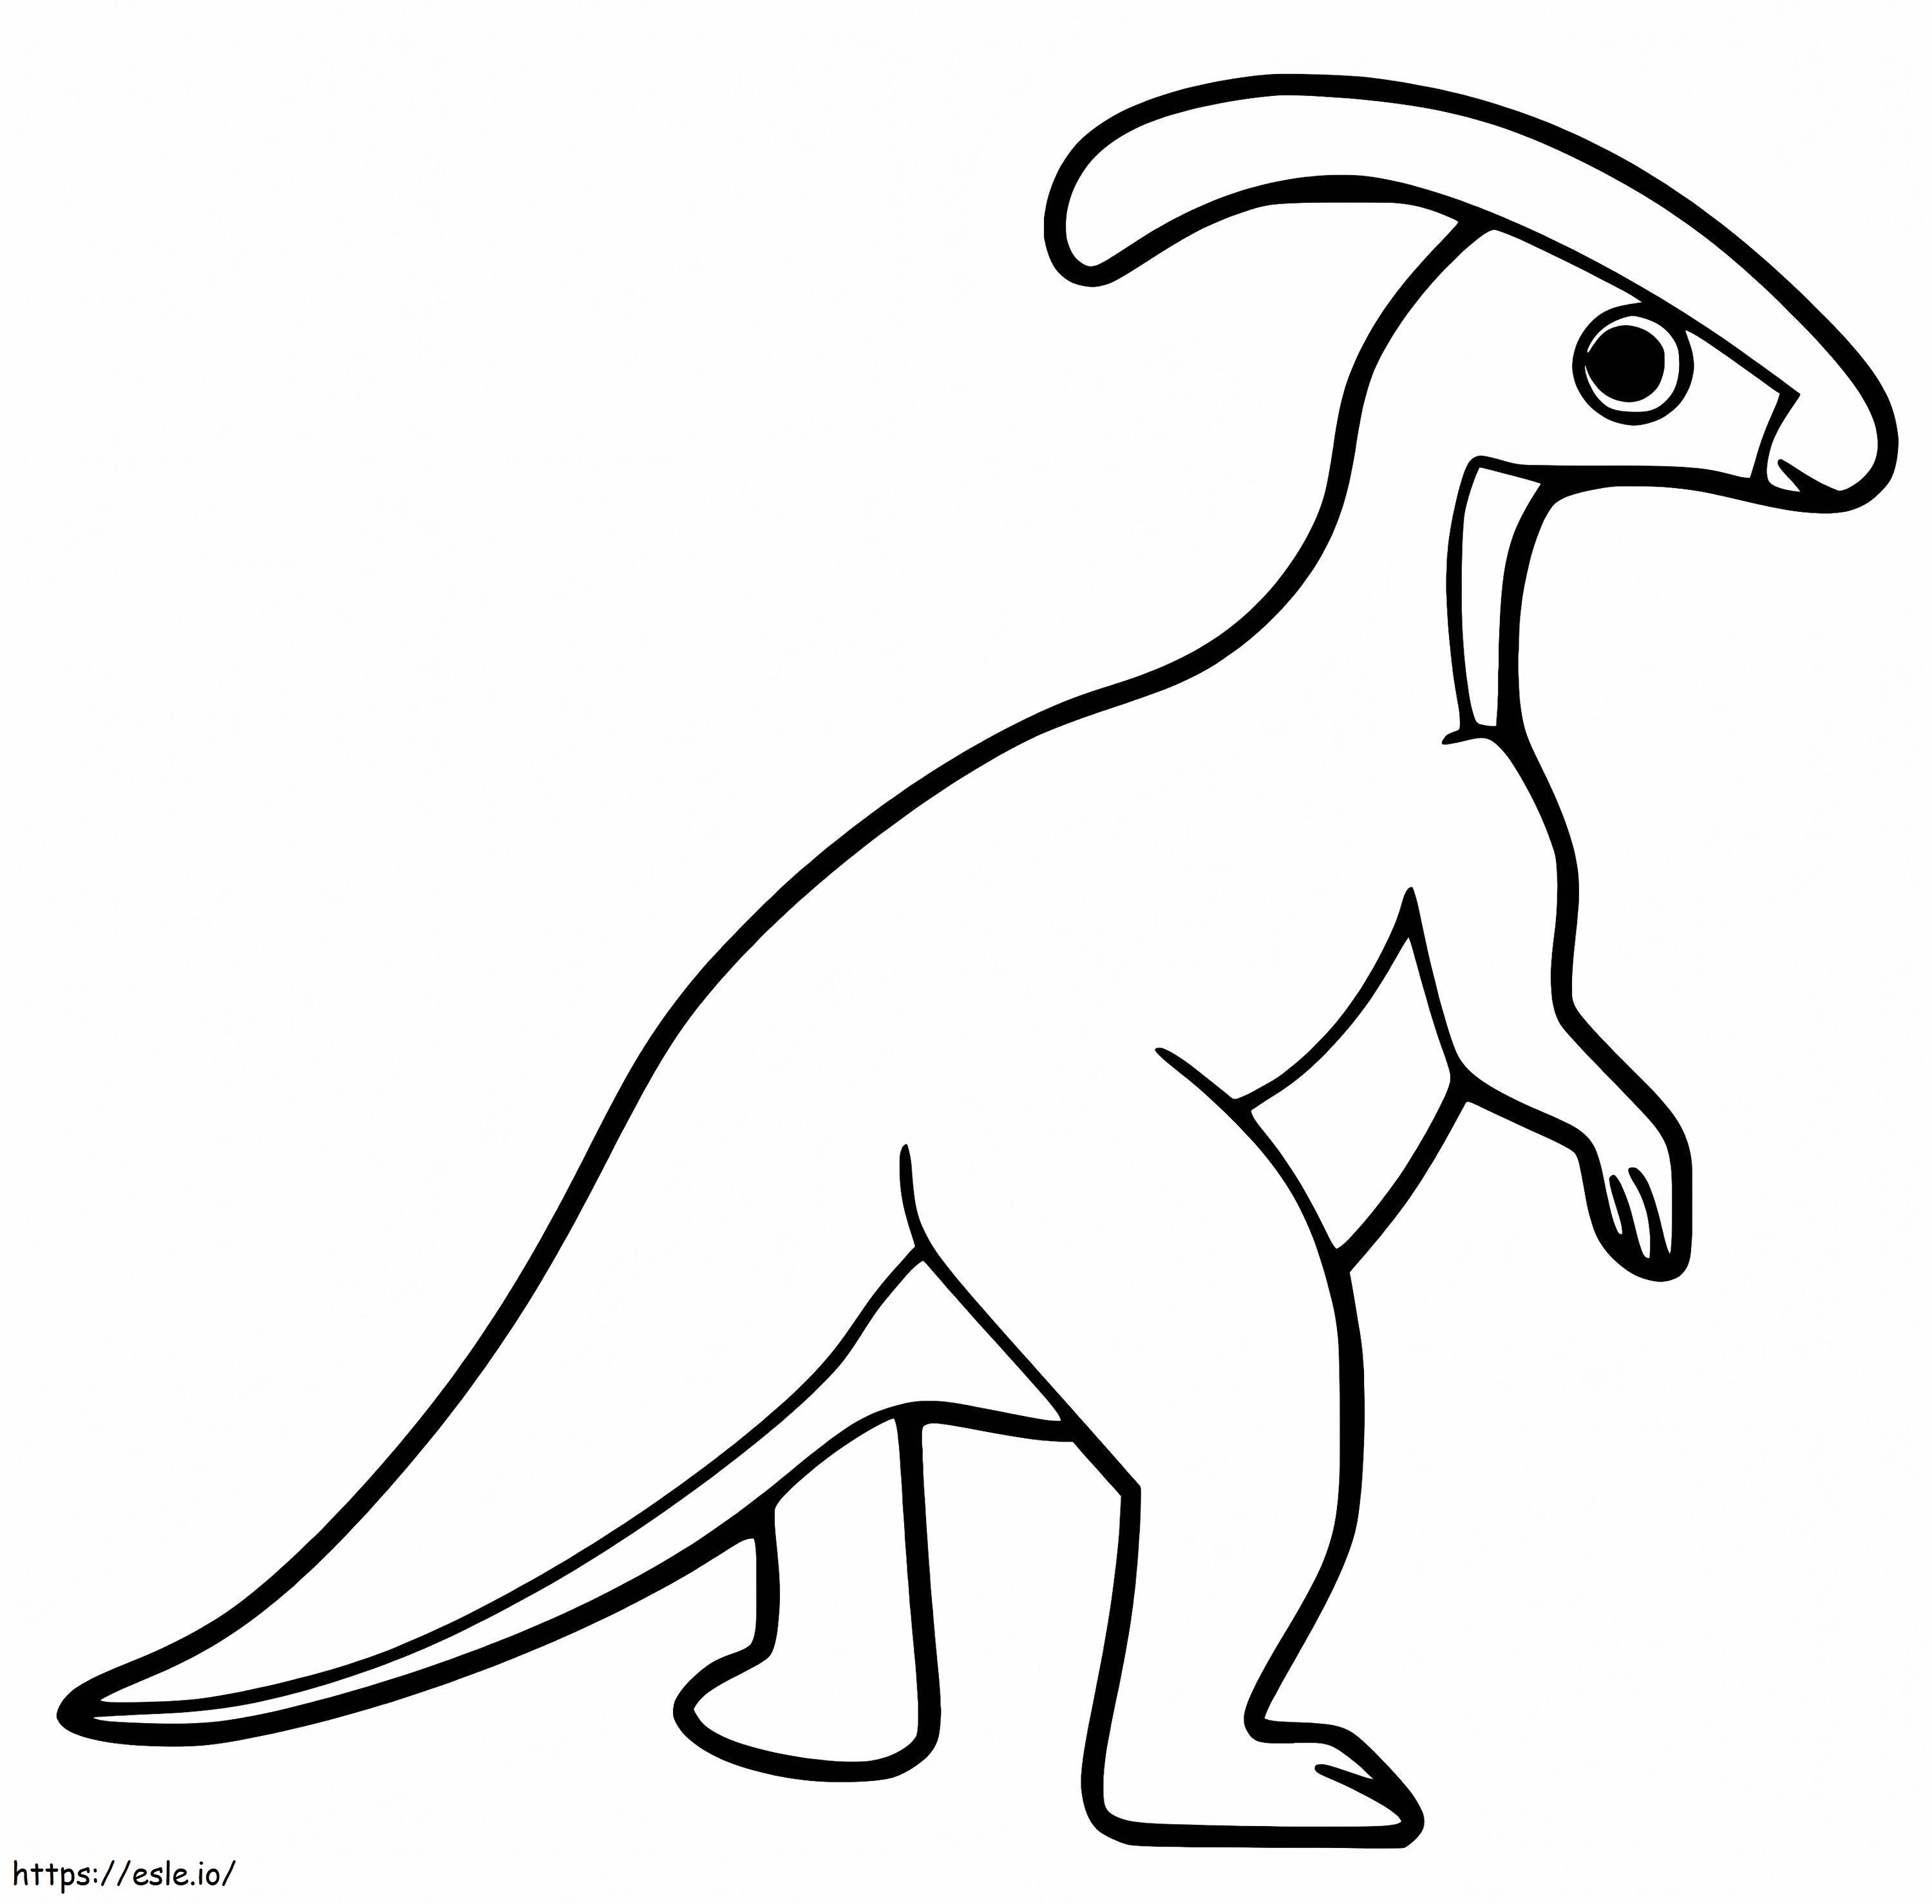 Süßer Parasaurolophus ausmalbilder